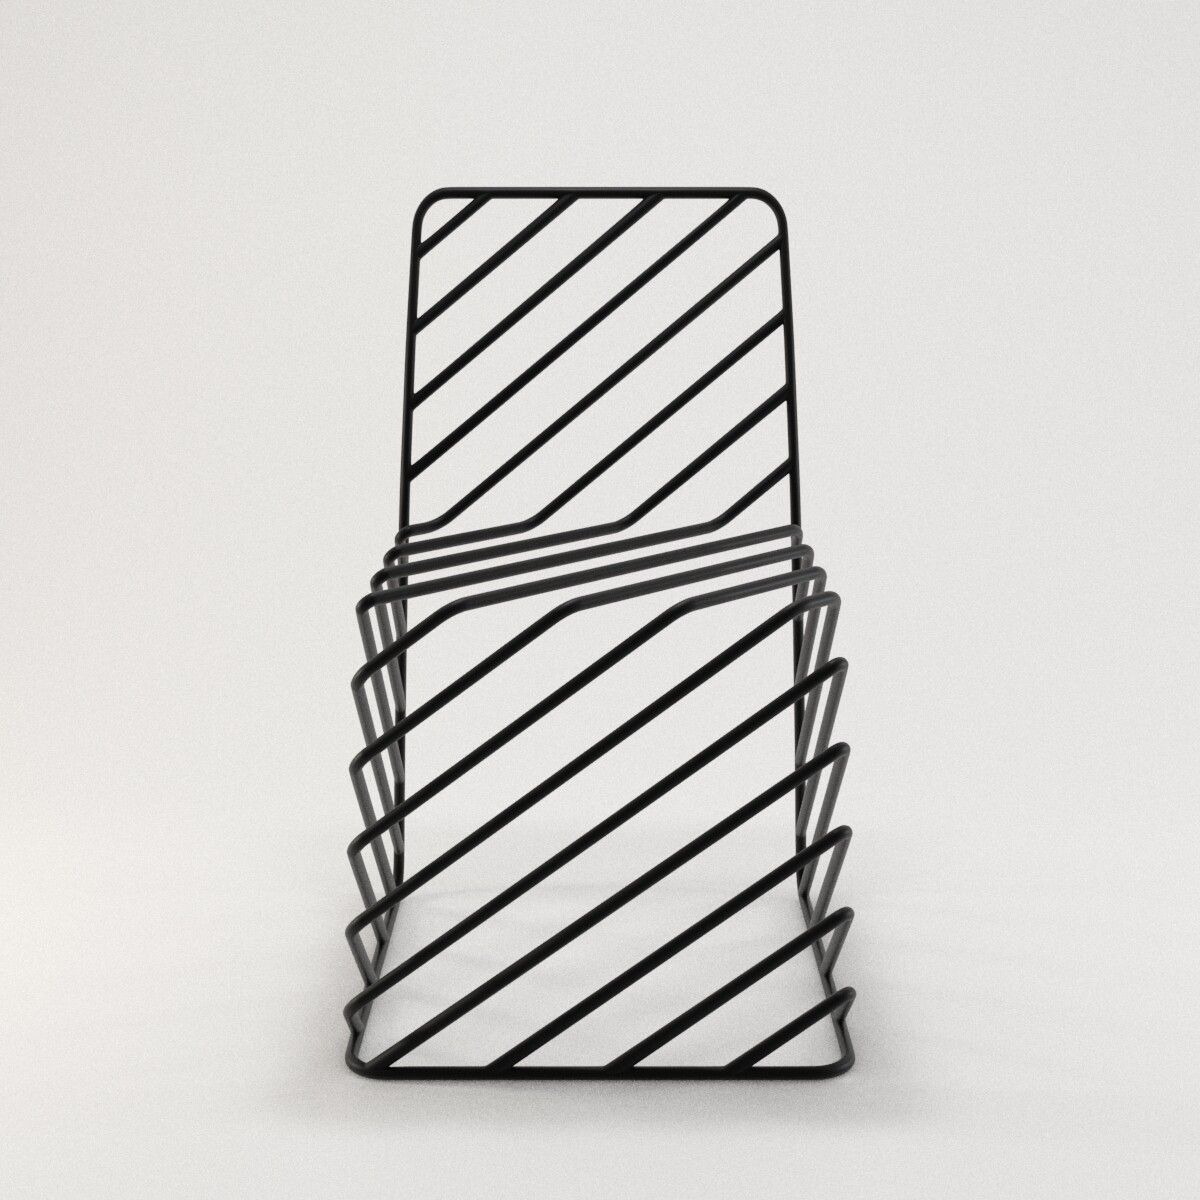 Minimalist Chair By Nendo Studio (3)